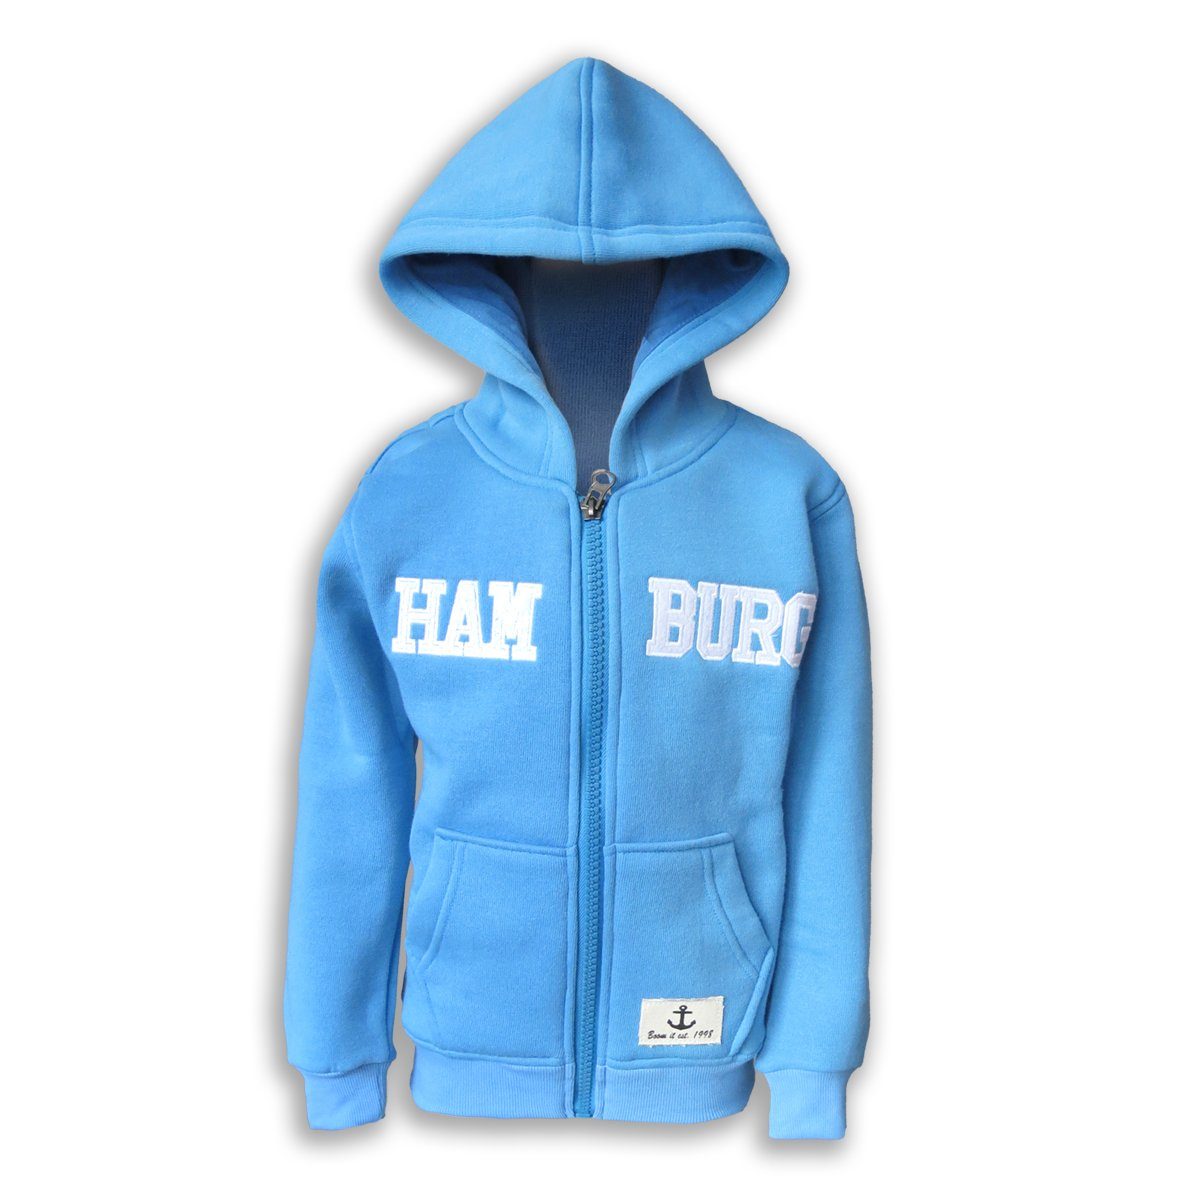 Sonia Originelli T-Shirt Sweatjacke "Hamburg" Kinder unifarben Jacke Hoodie bestickt hellblau